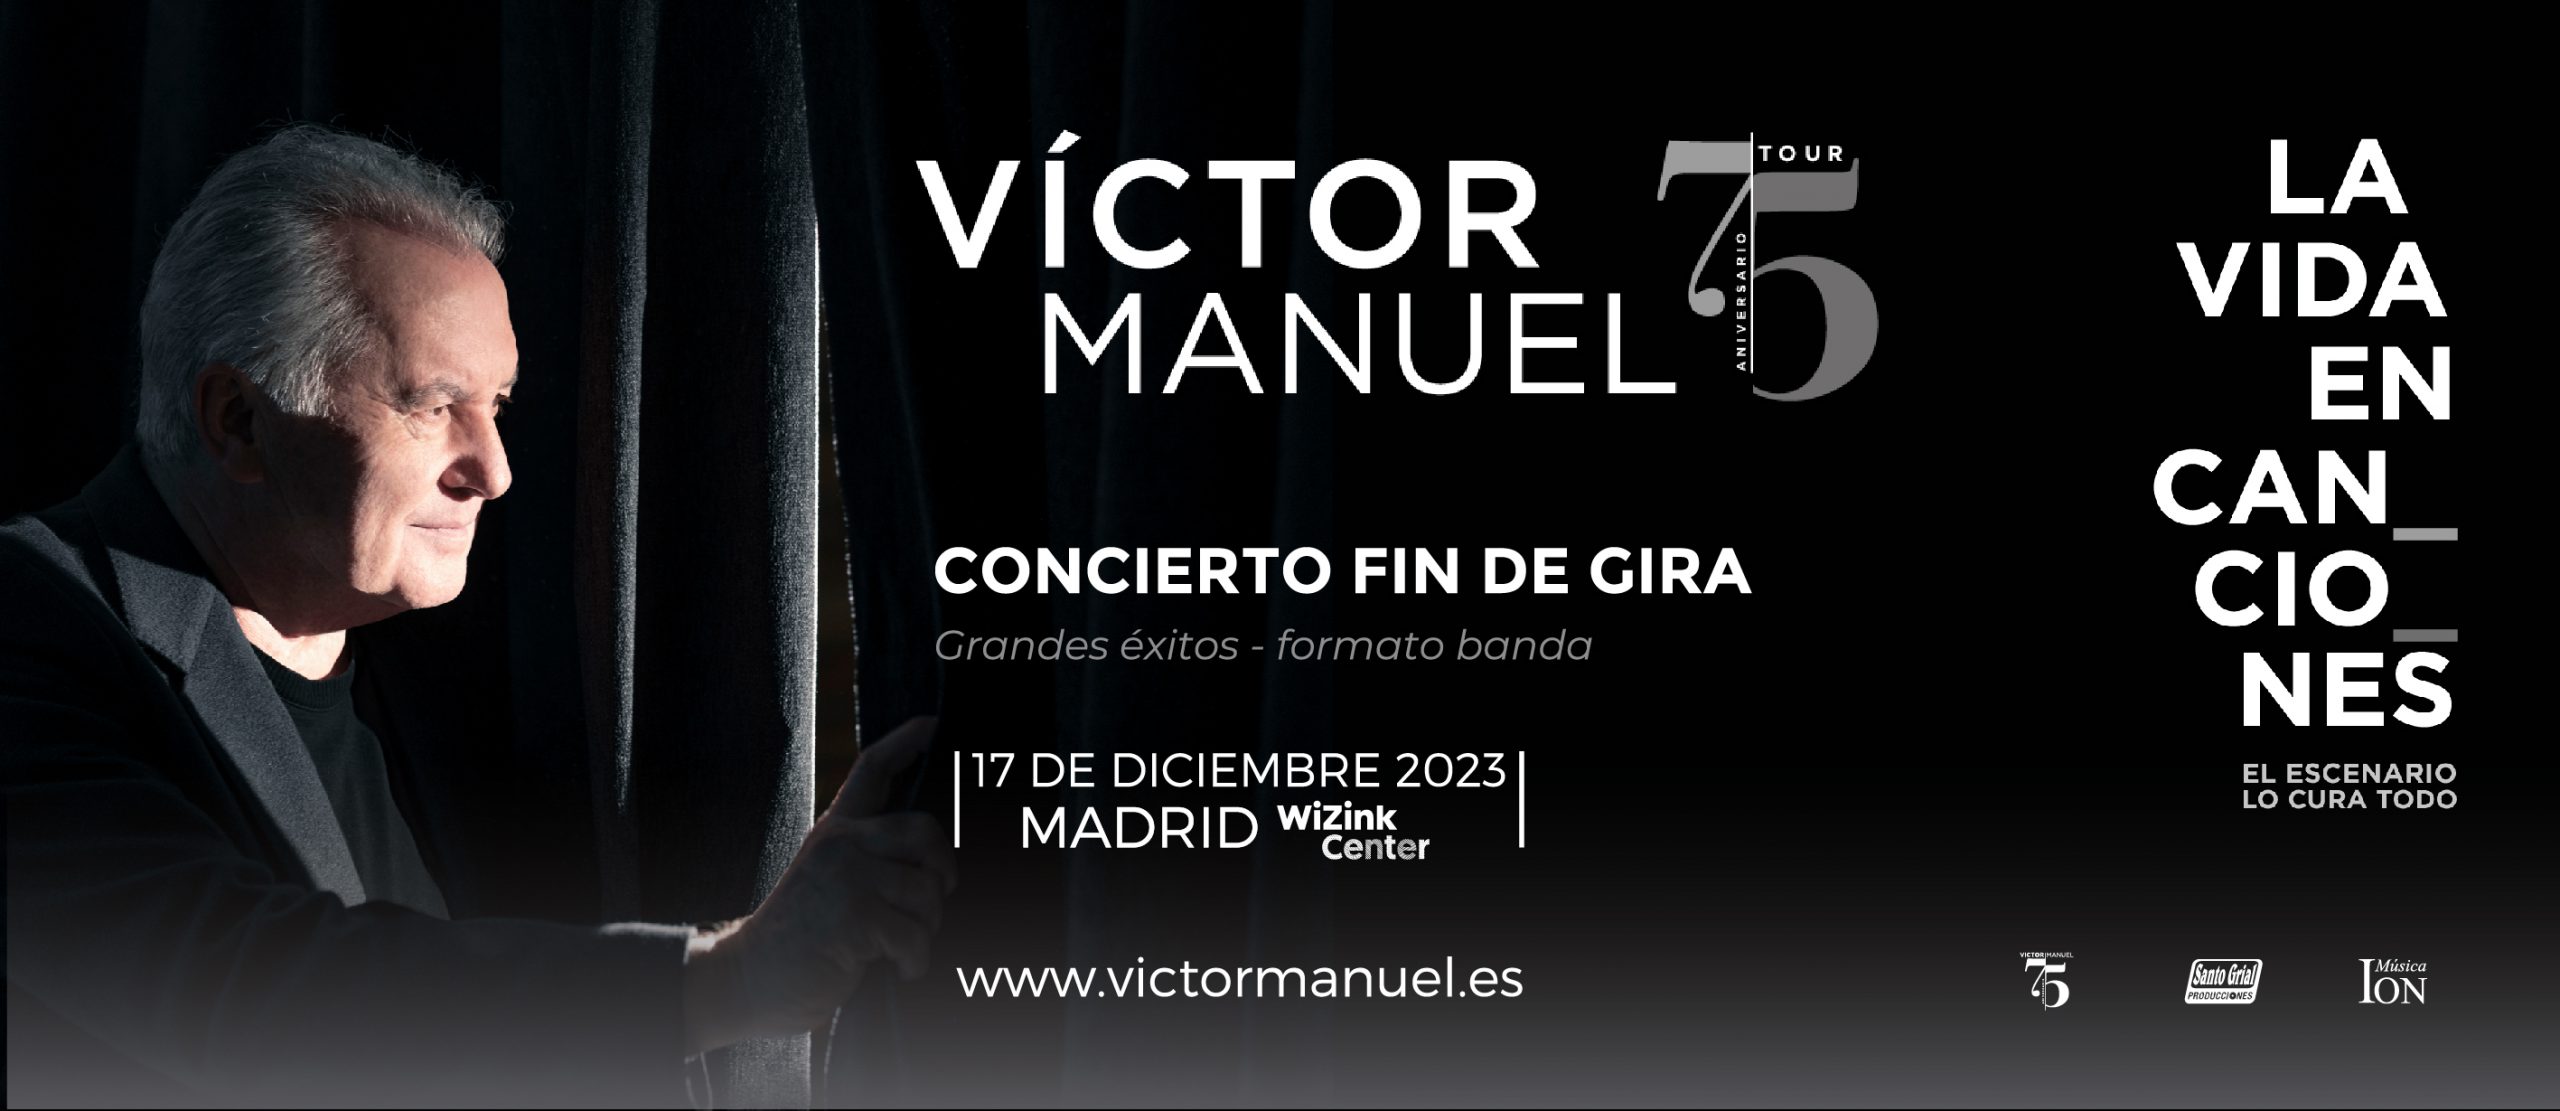 Víctor Manuel - Concierto fin de gira